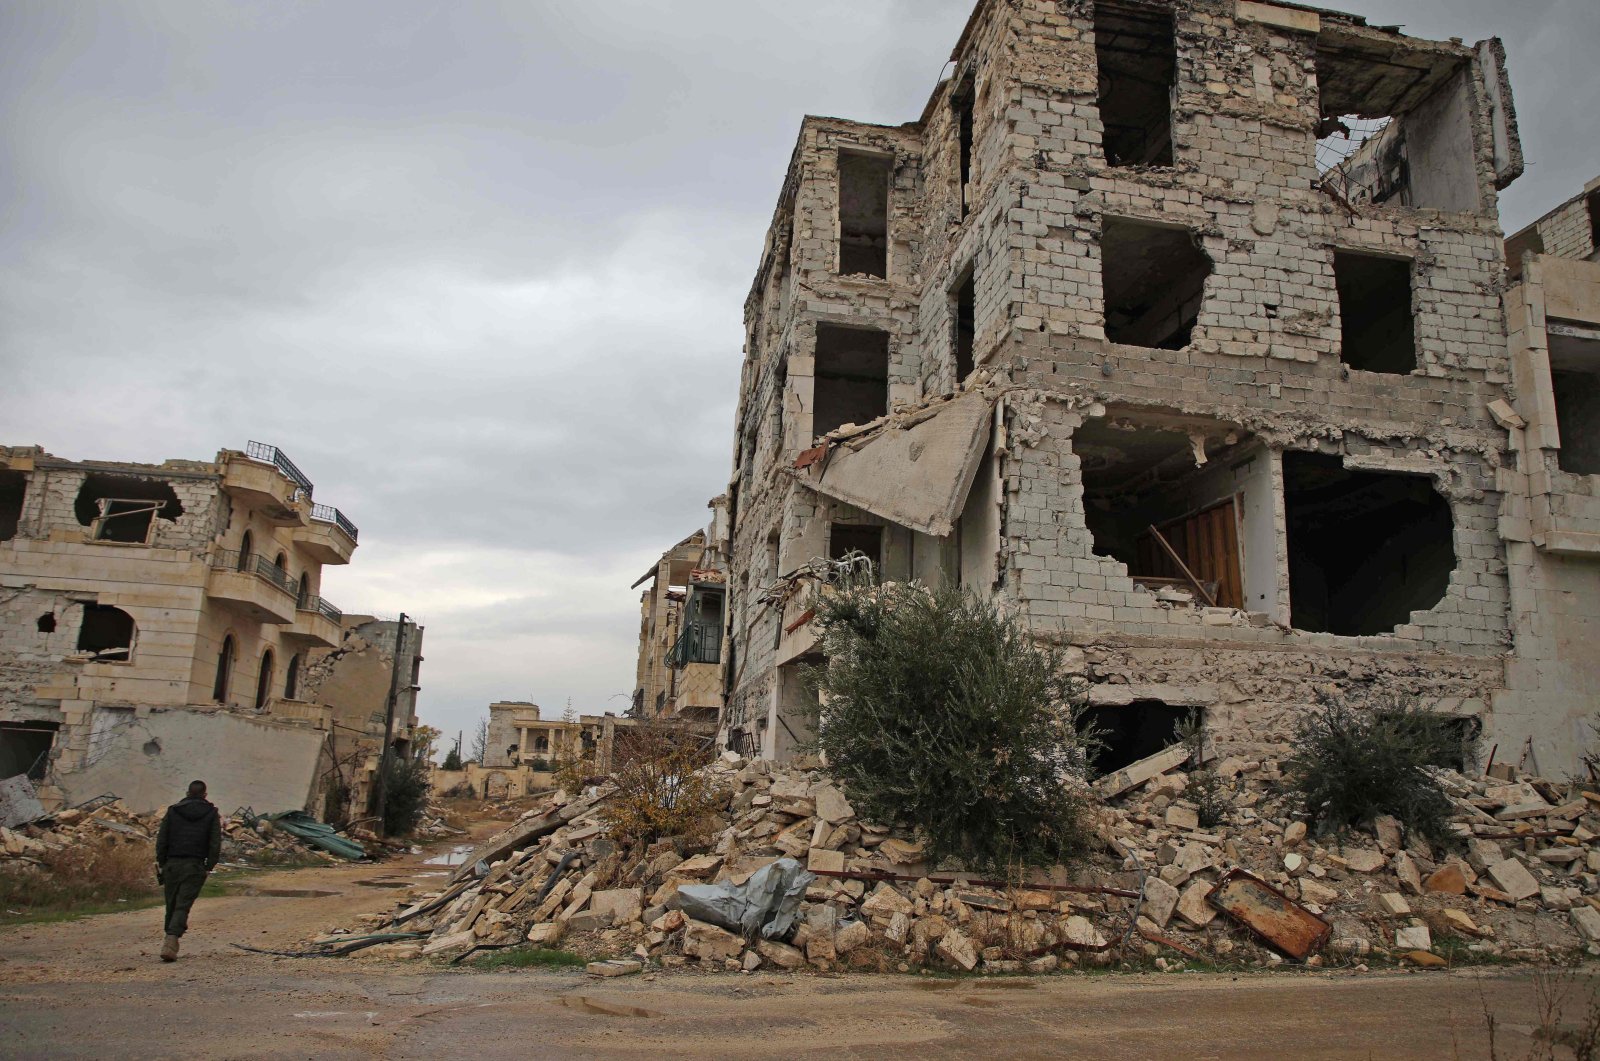 
A damaged building in the Syrian opposition-held Al-Rashidin district of western Aleppo's countryside near Idlib province, Nov. 26, 2018. (AFP)
